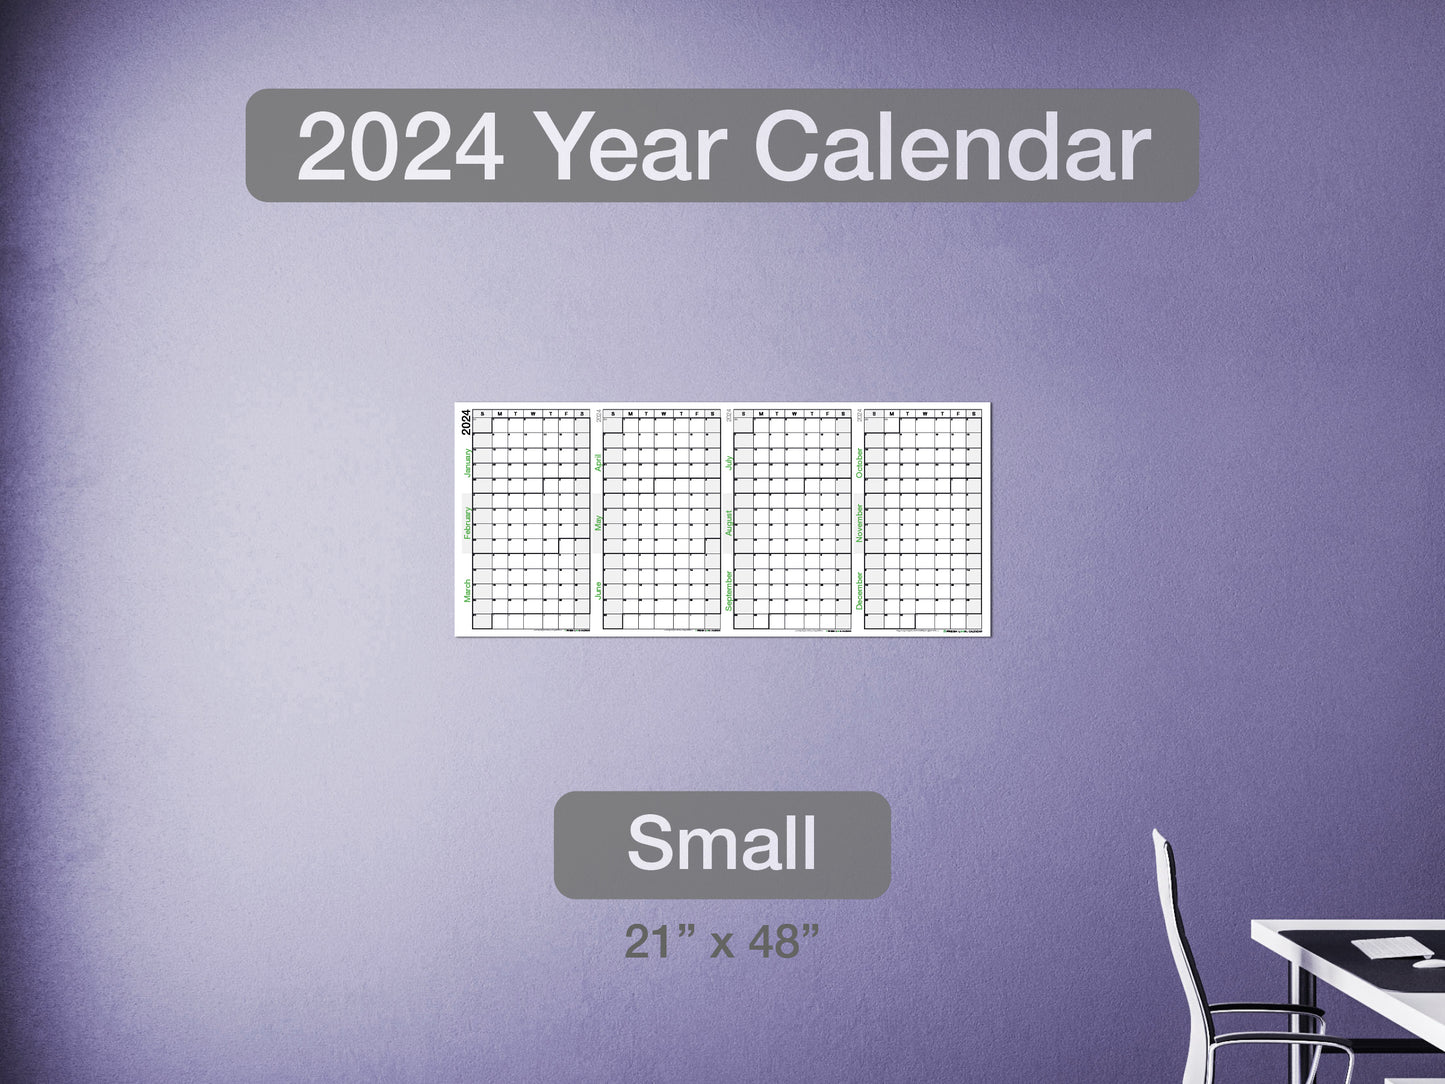 2024 Year Calendar Small